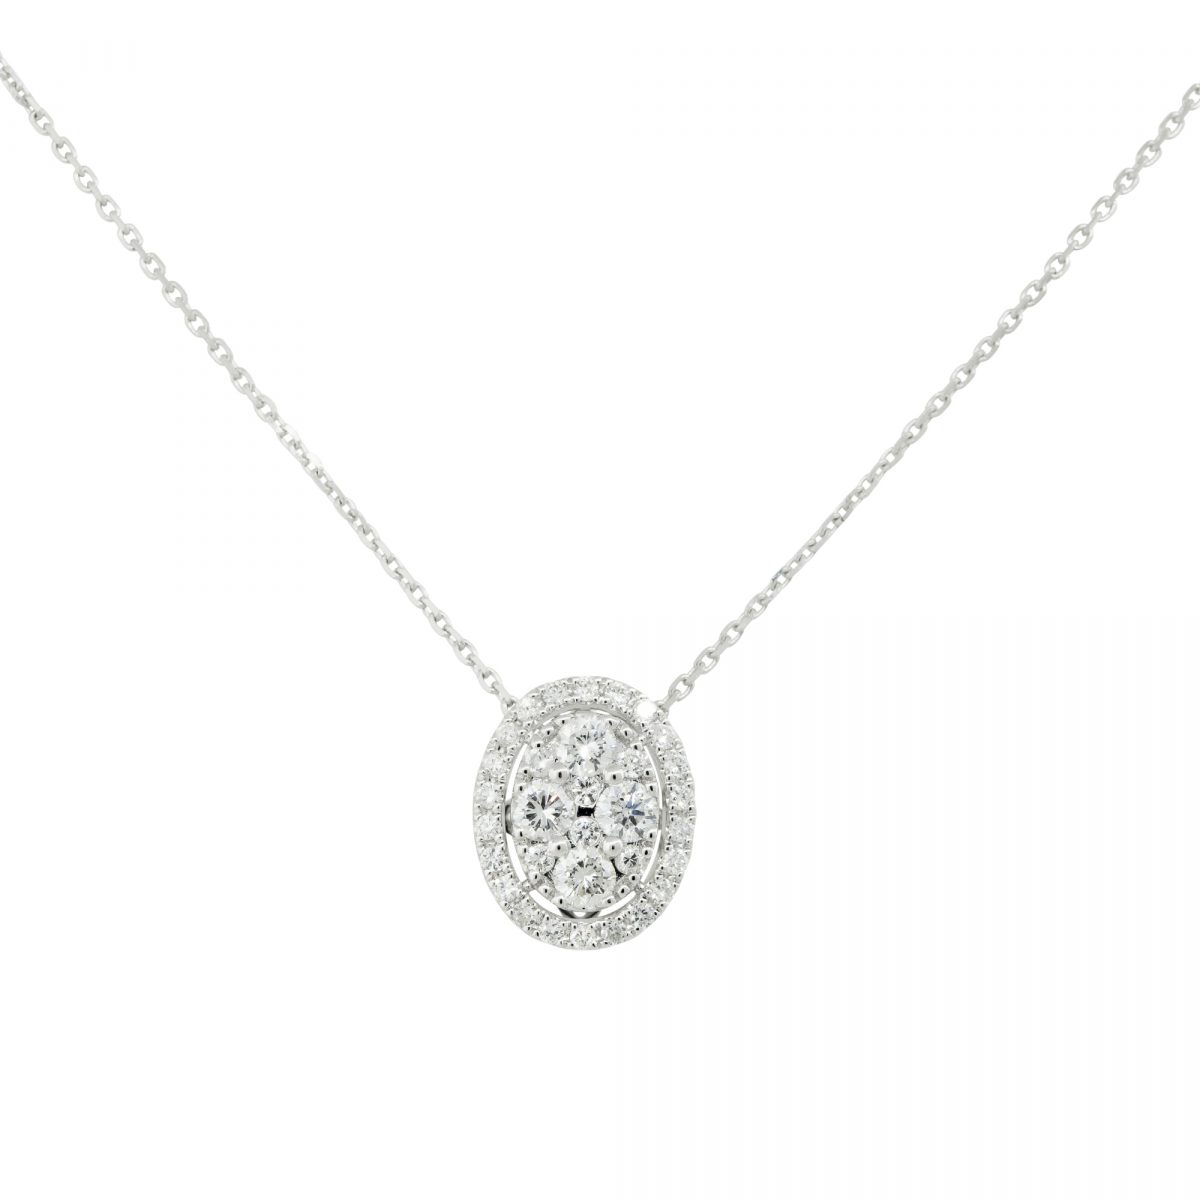 18k White Gold 0.85ctw Pave Diamond Oval Shaped Pendant Necklace